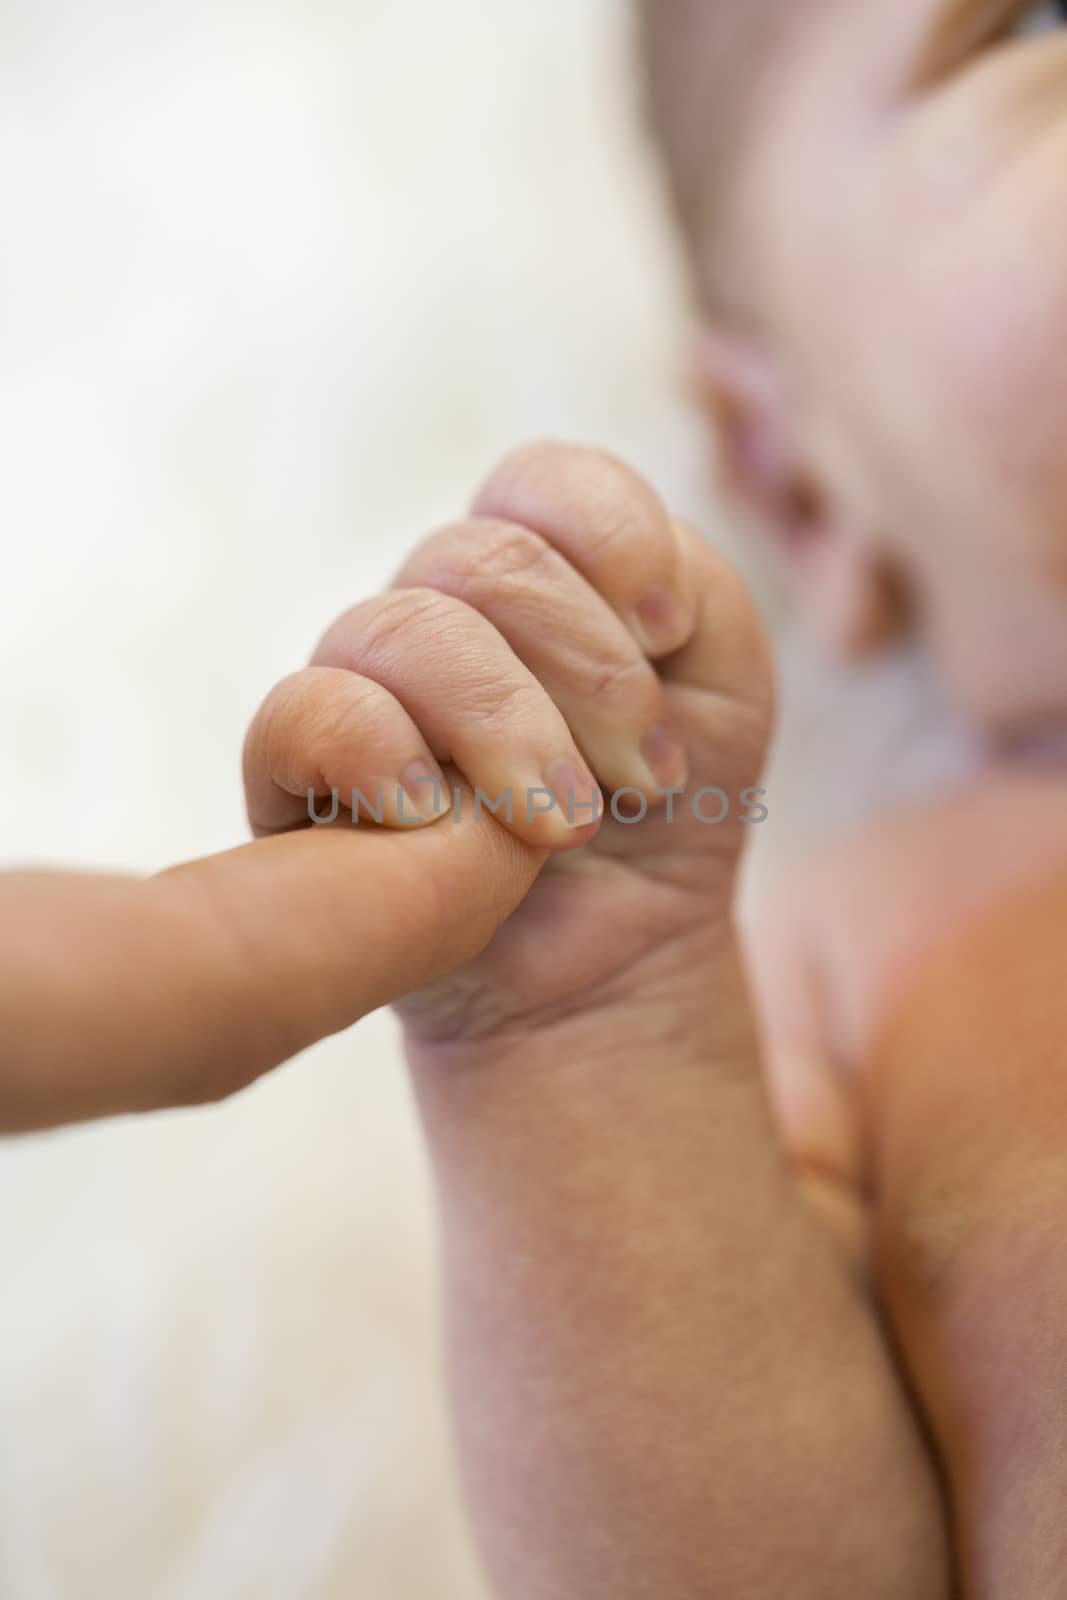 Tender love of a newborn infant by juniart